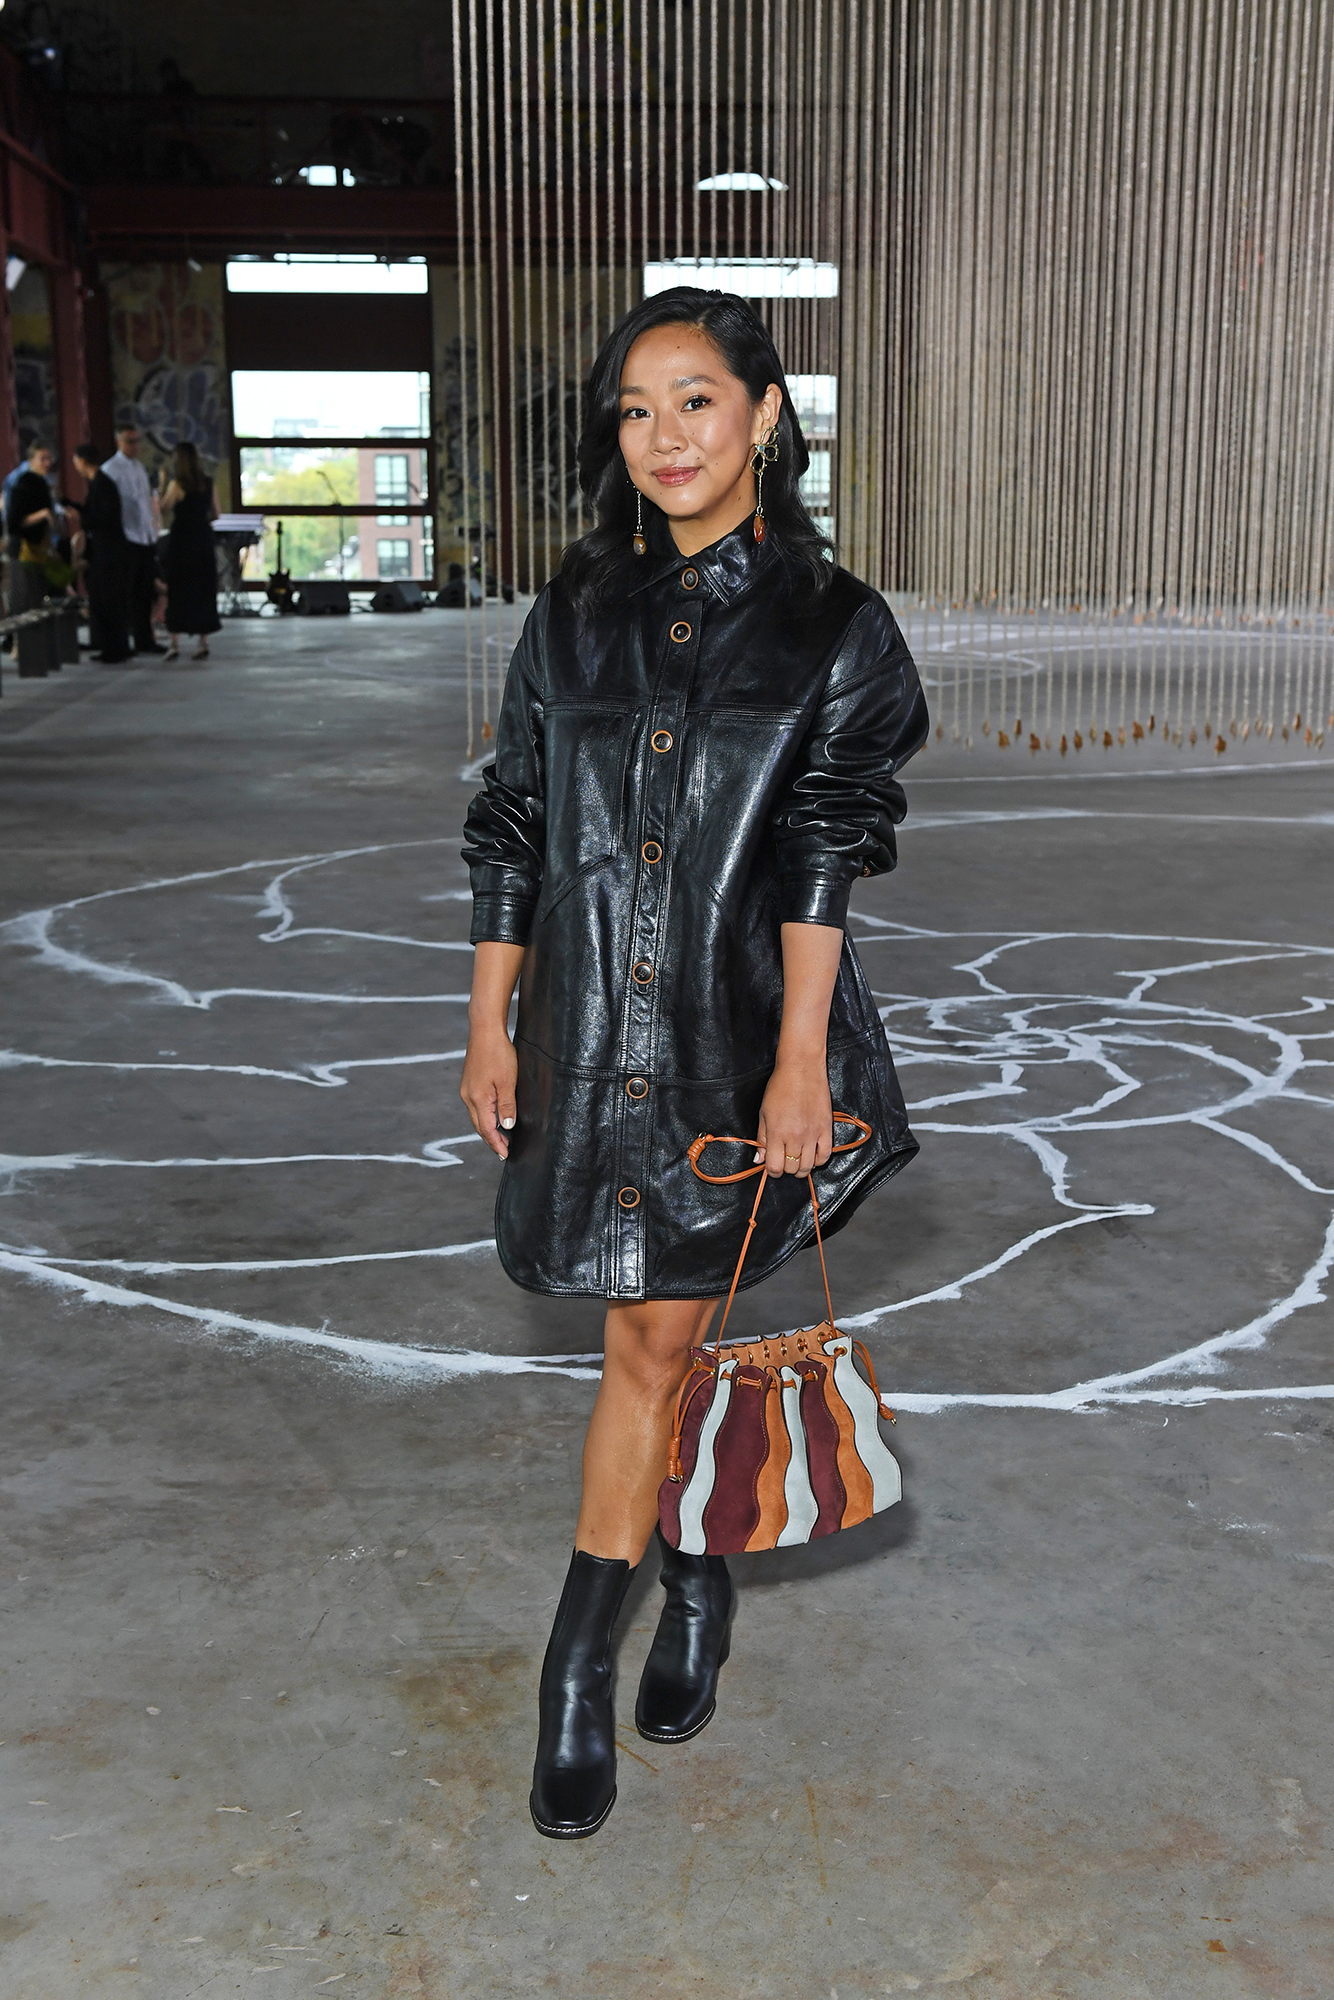 Stephanie Hsu Rocks a Chic Leather Dress: Channel the Look | Us Weekly